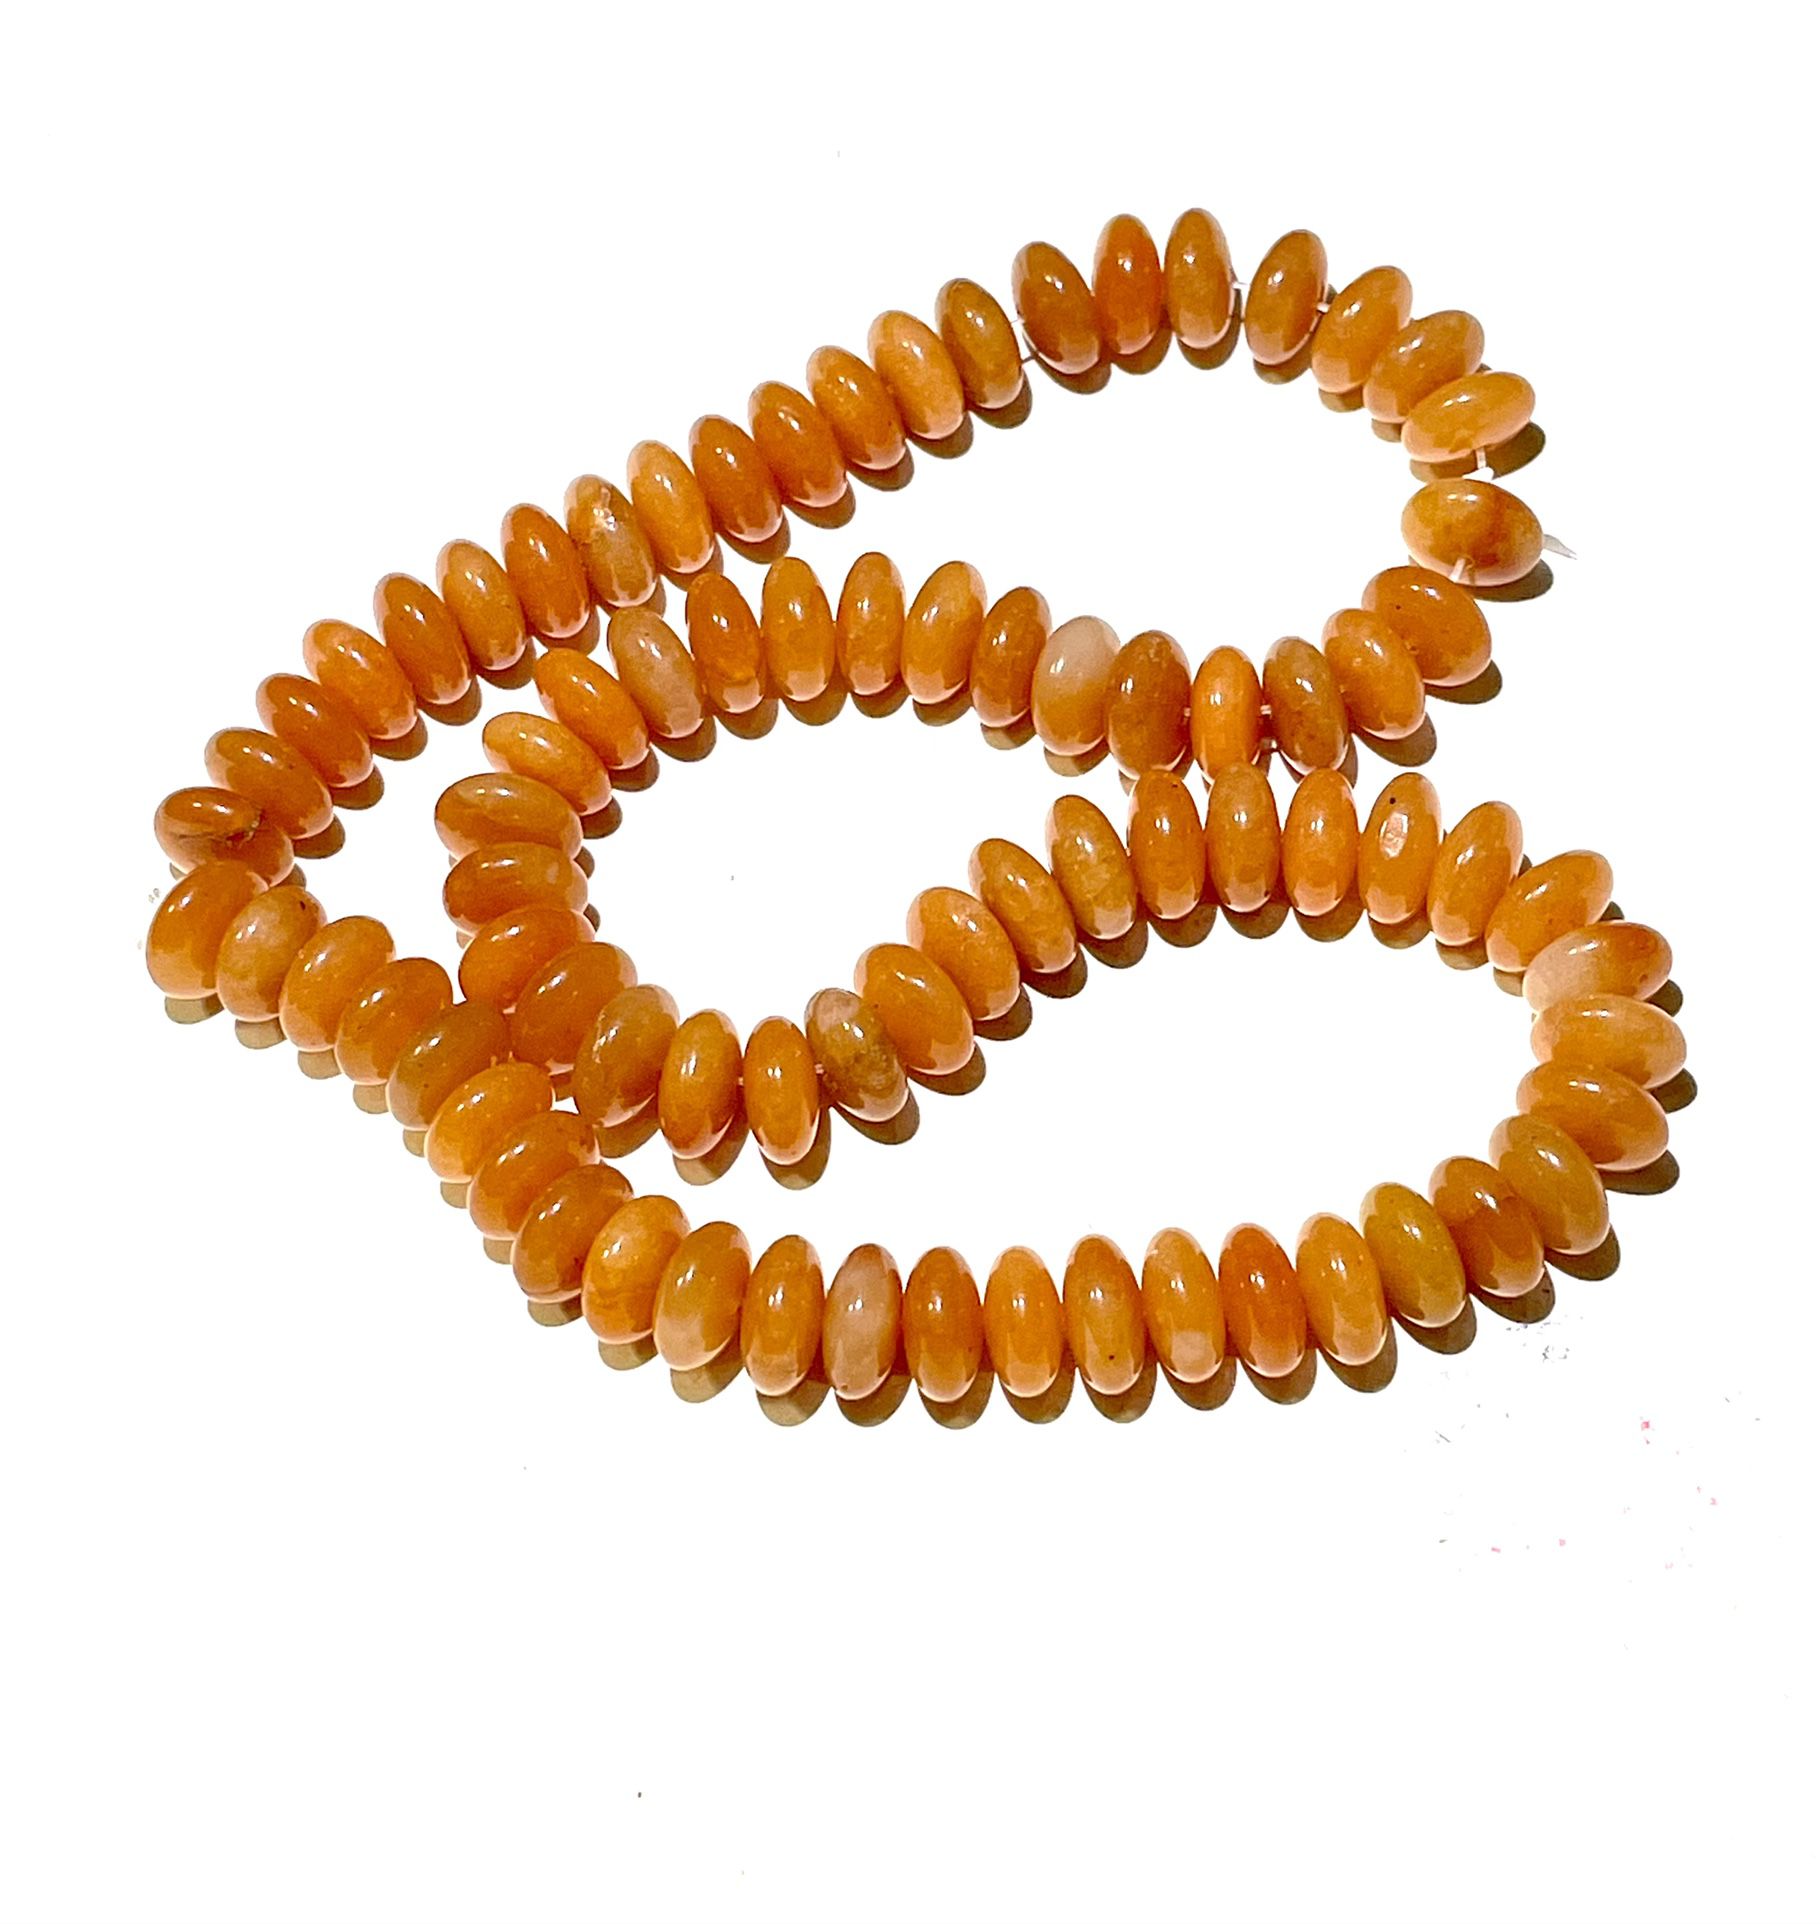 Strand Of Citrine Gemstone Beads 